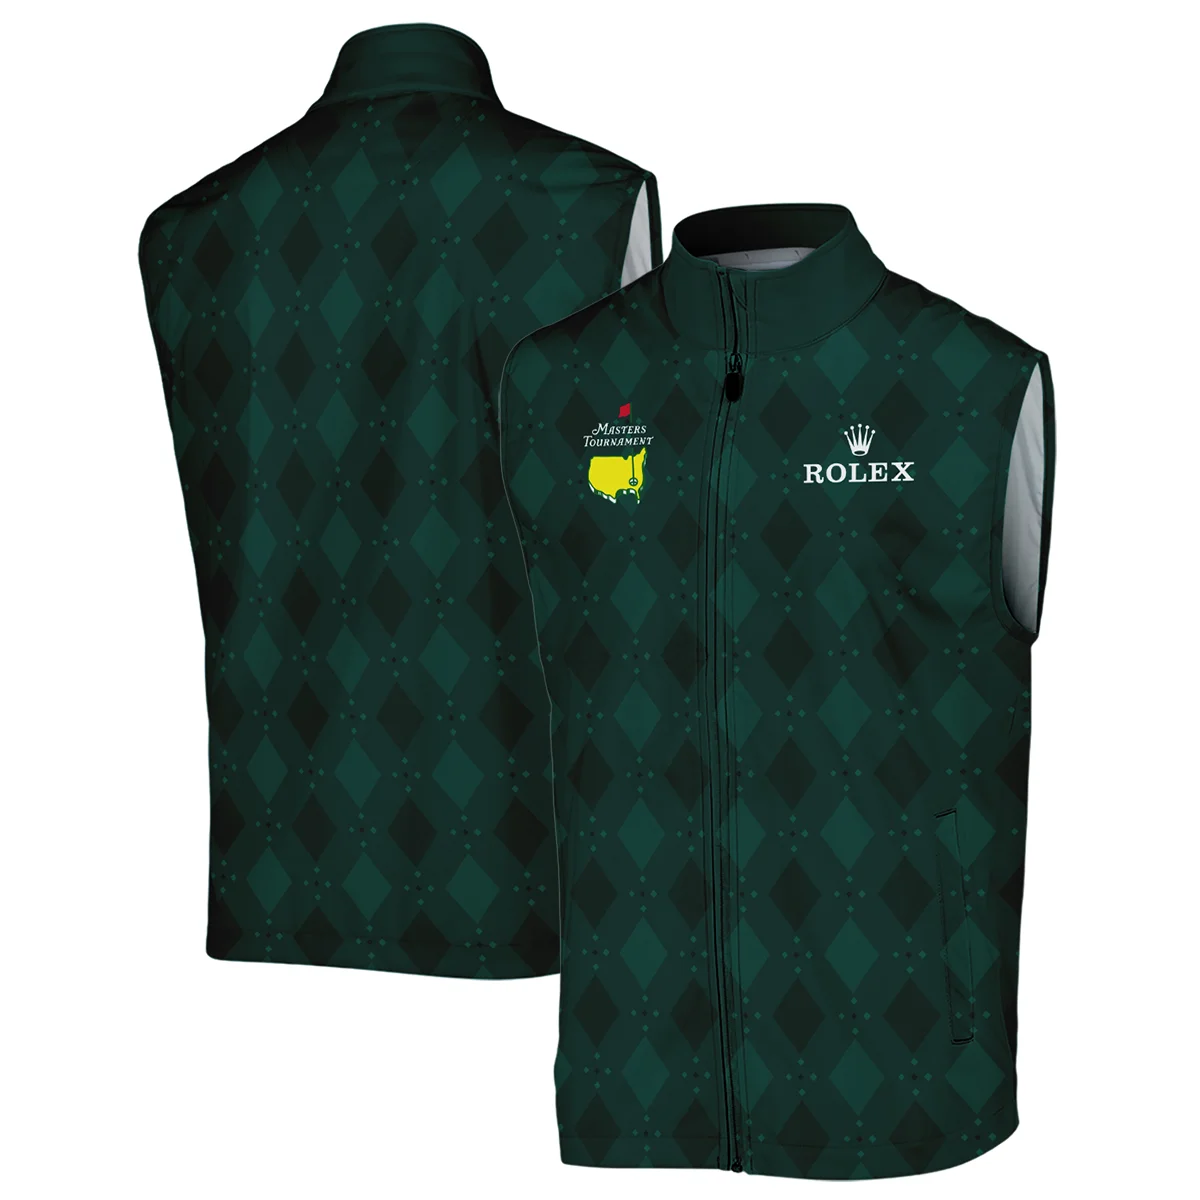 Dark Green Argyle Plaid Pattern Golf Masters Tournament Rolex Hawaiian Shirt Style Classic Oversized Hawaiian Shirt